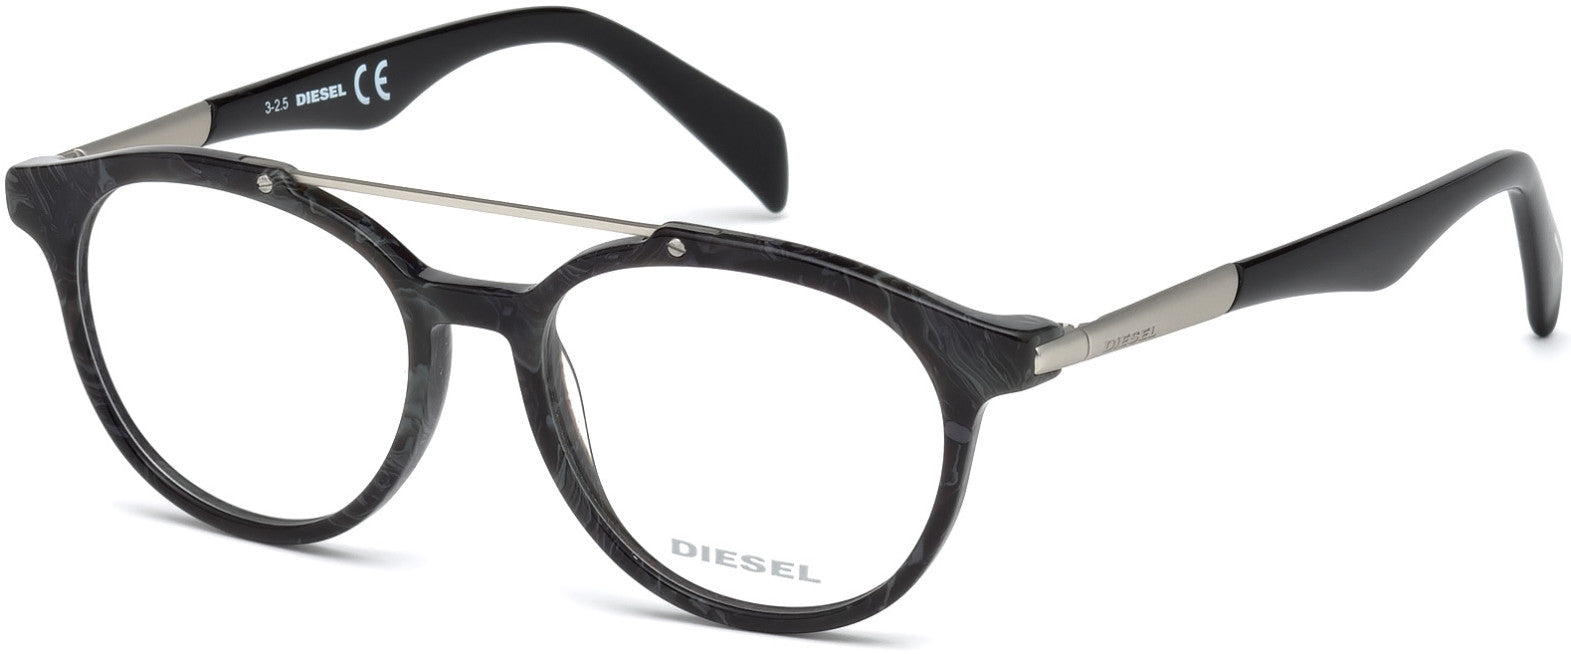 Diesel DL5194 Round Eyeglasses 005-005 - Black/other